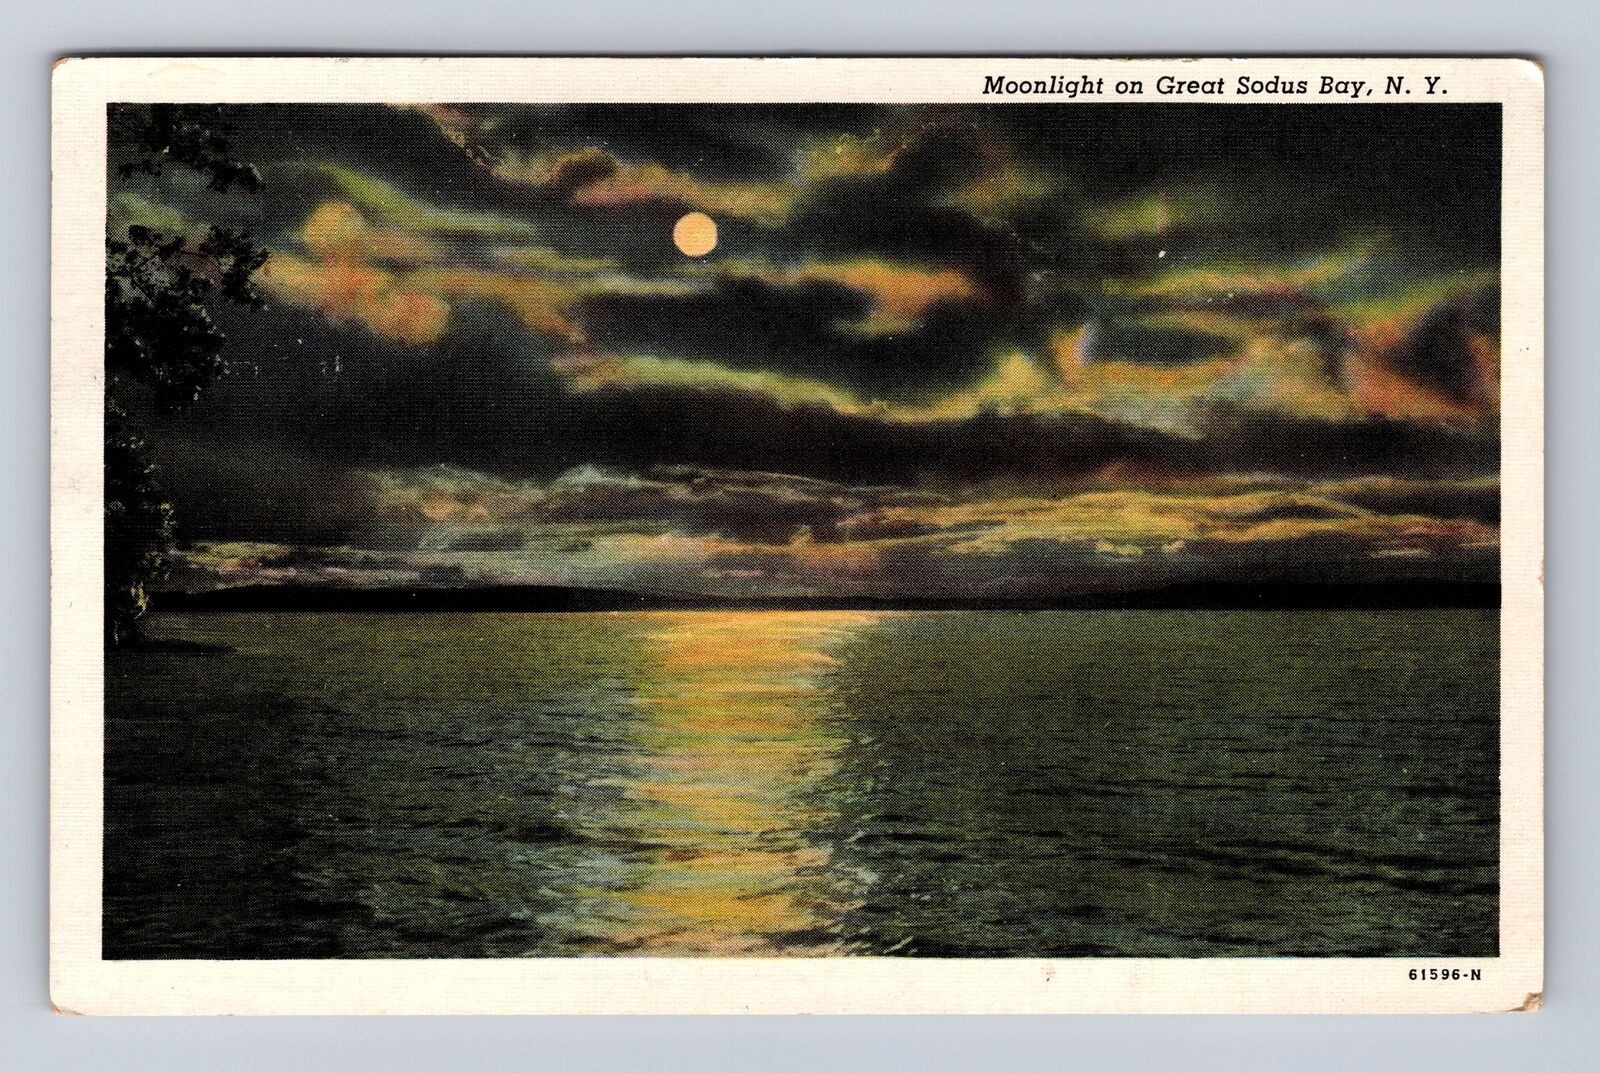 Great Sodus Bay NY-New York, Moonlight, Antique, Vintage c1952 Souvenir Postcard